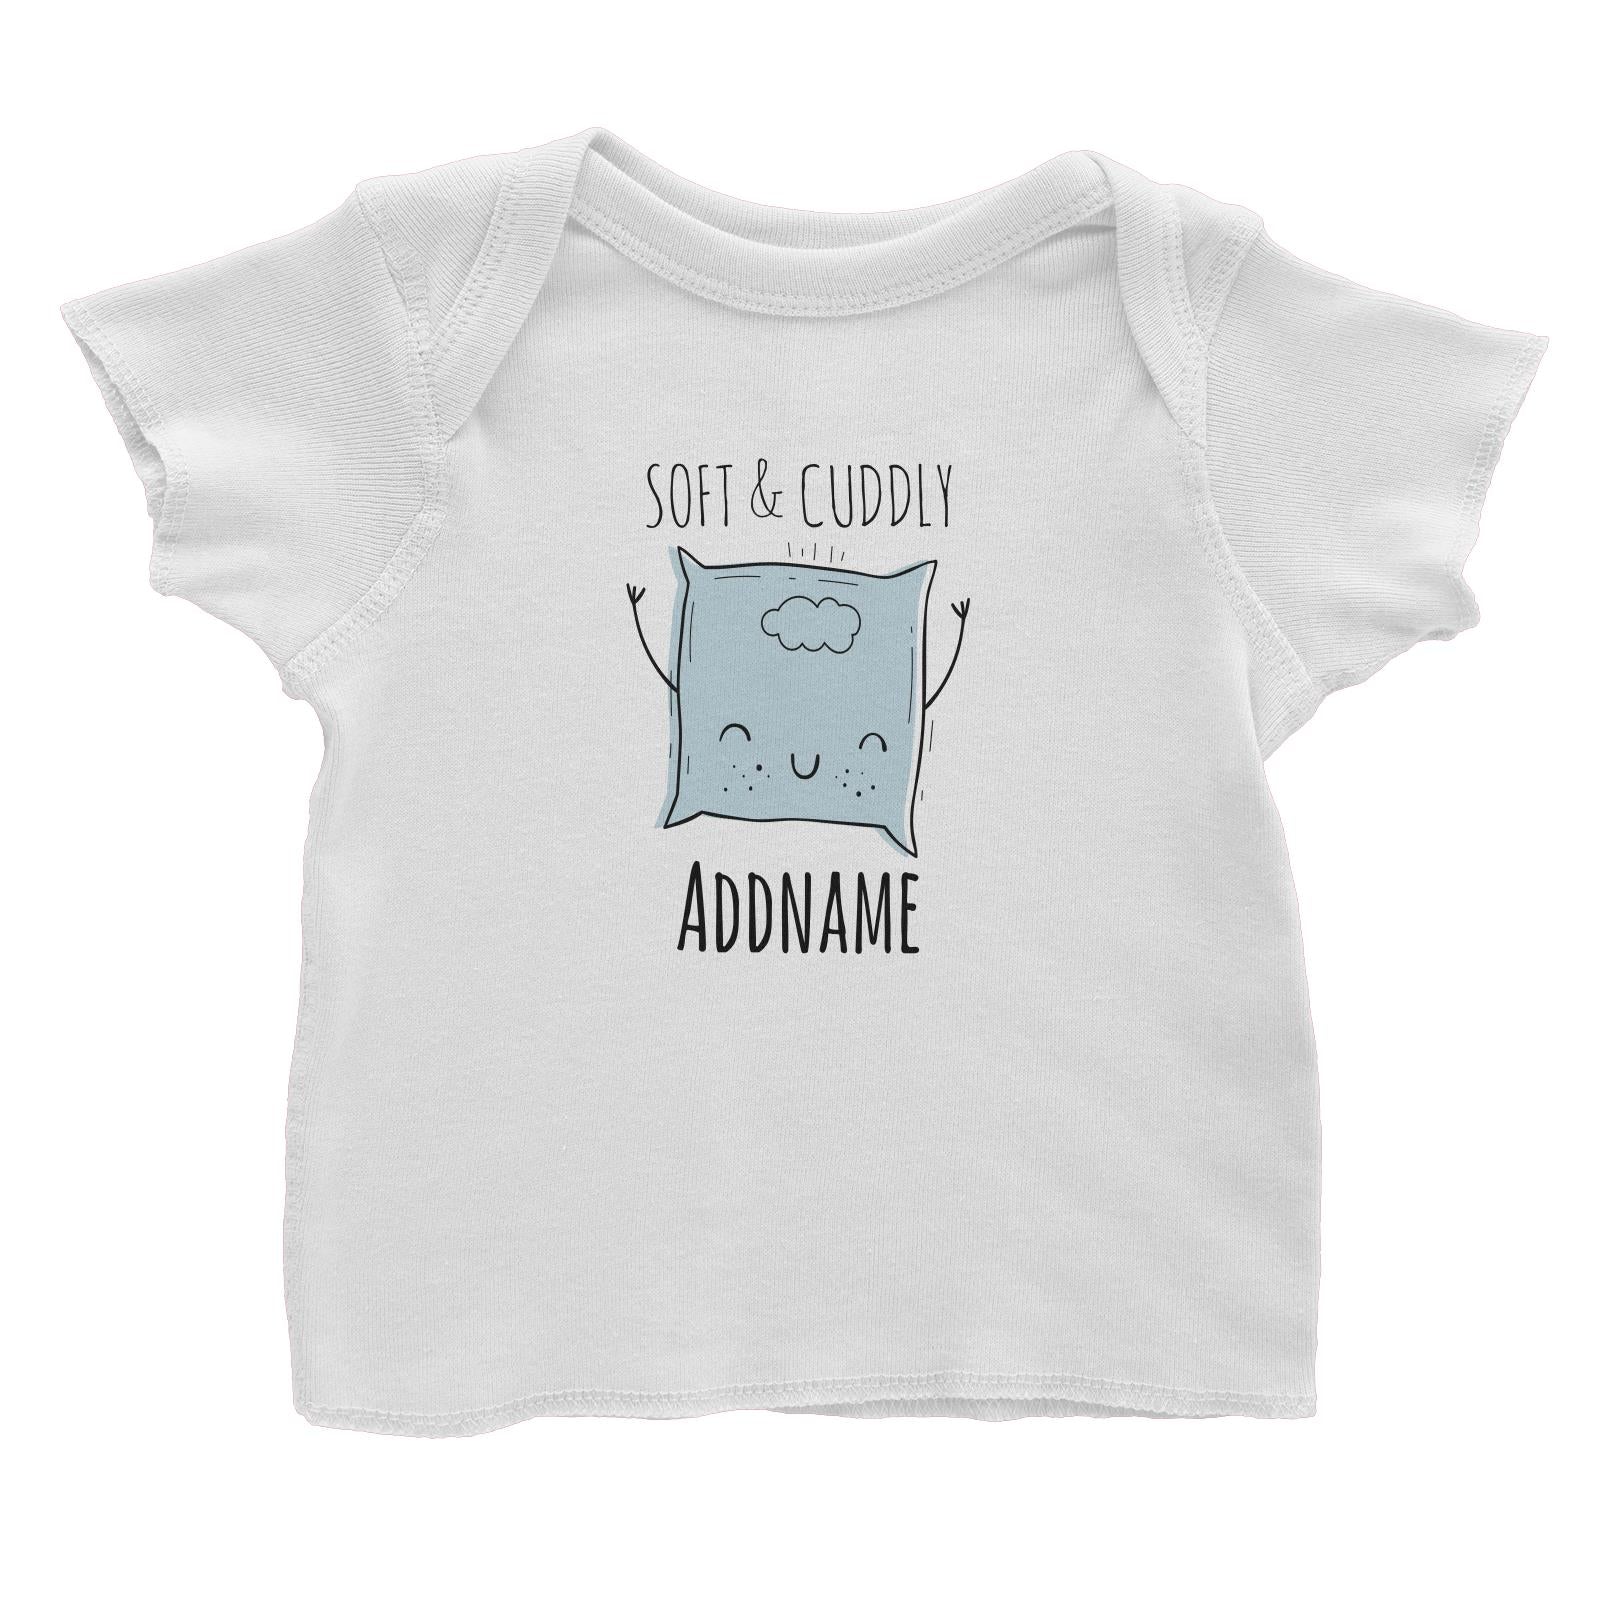 Drawn Newborn Element Soft and Cuddly Addname Baby T-Shirt